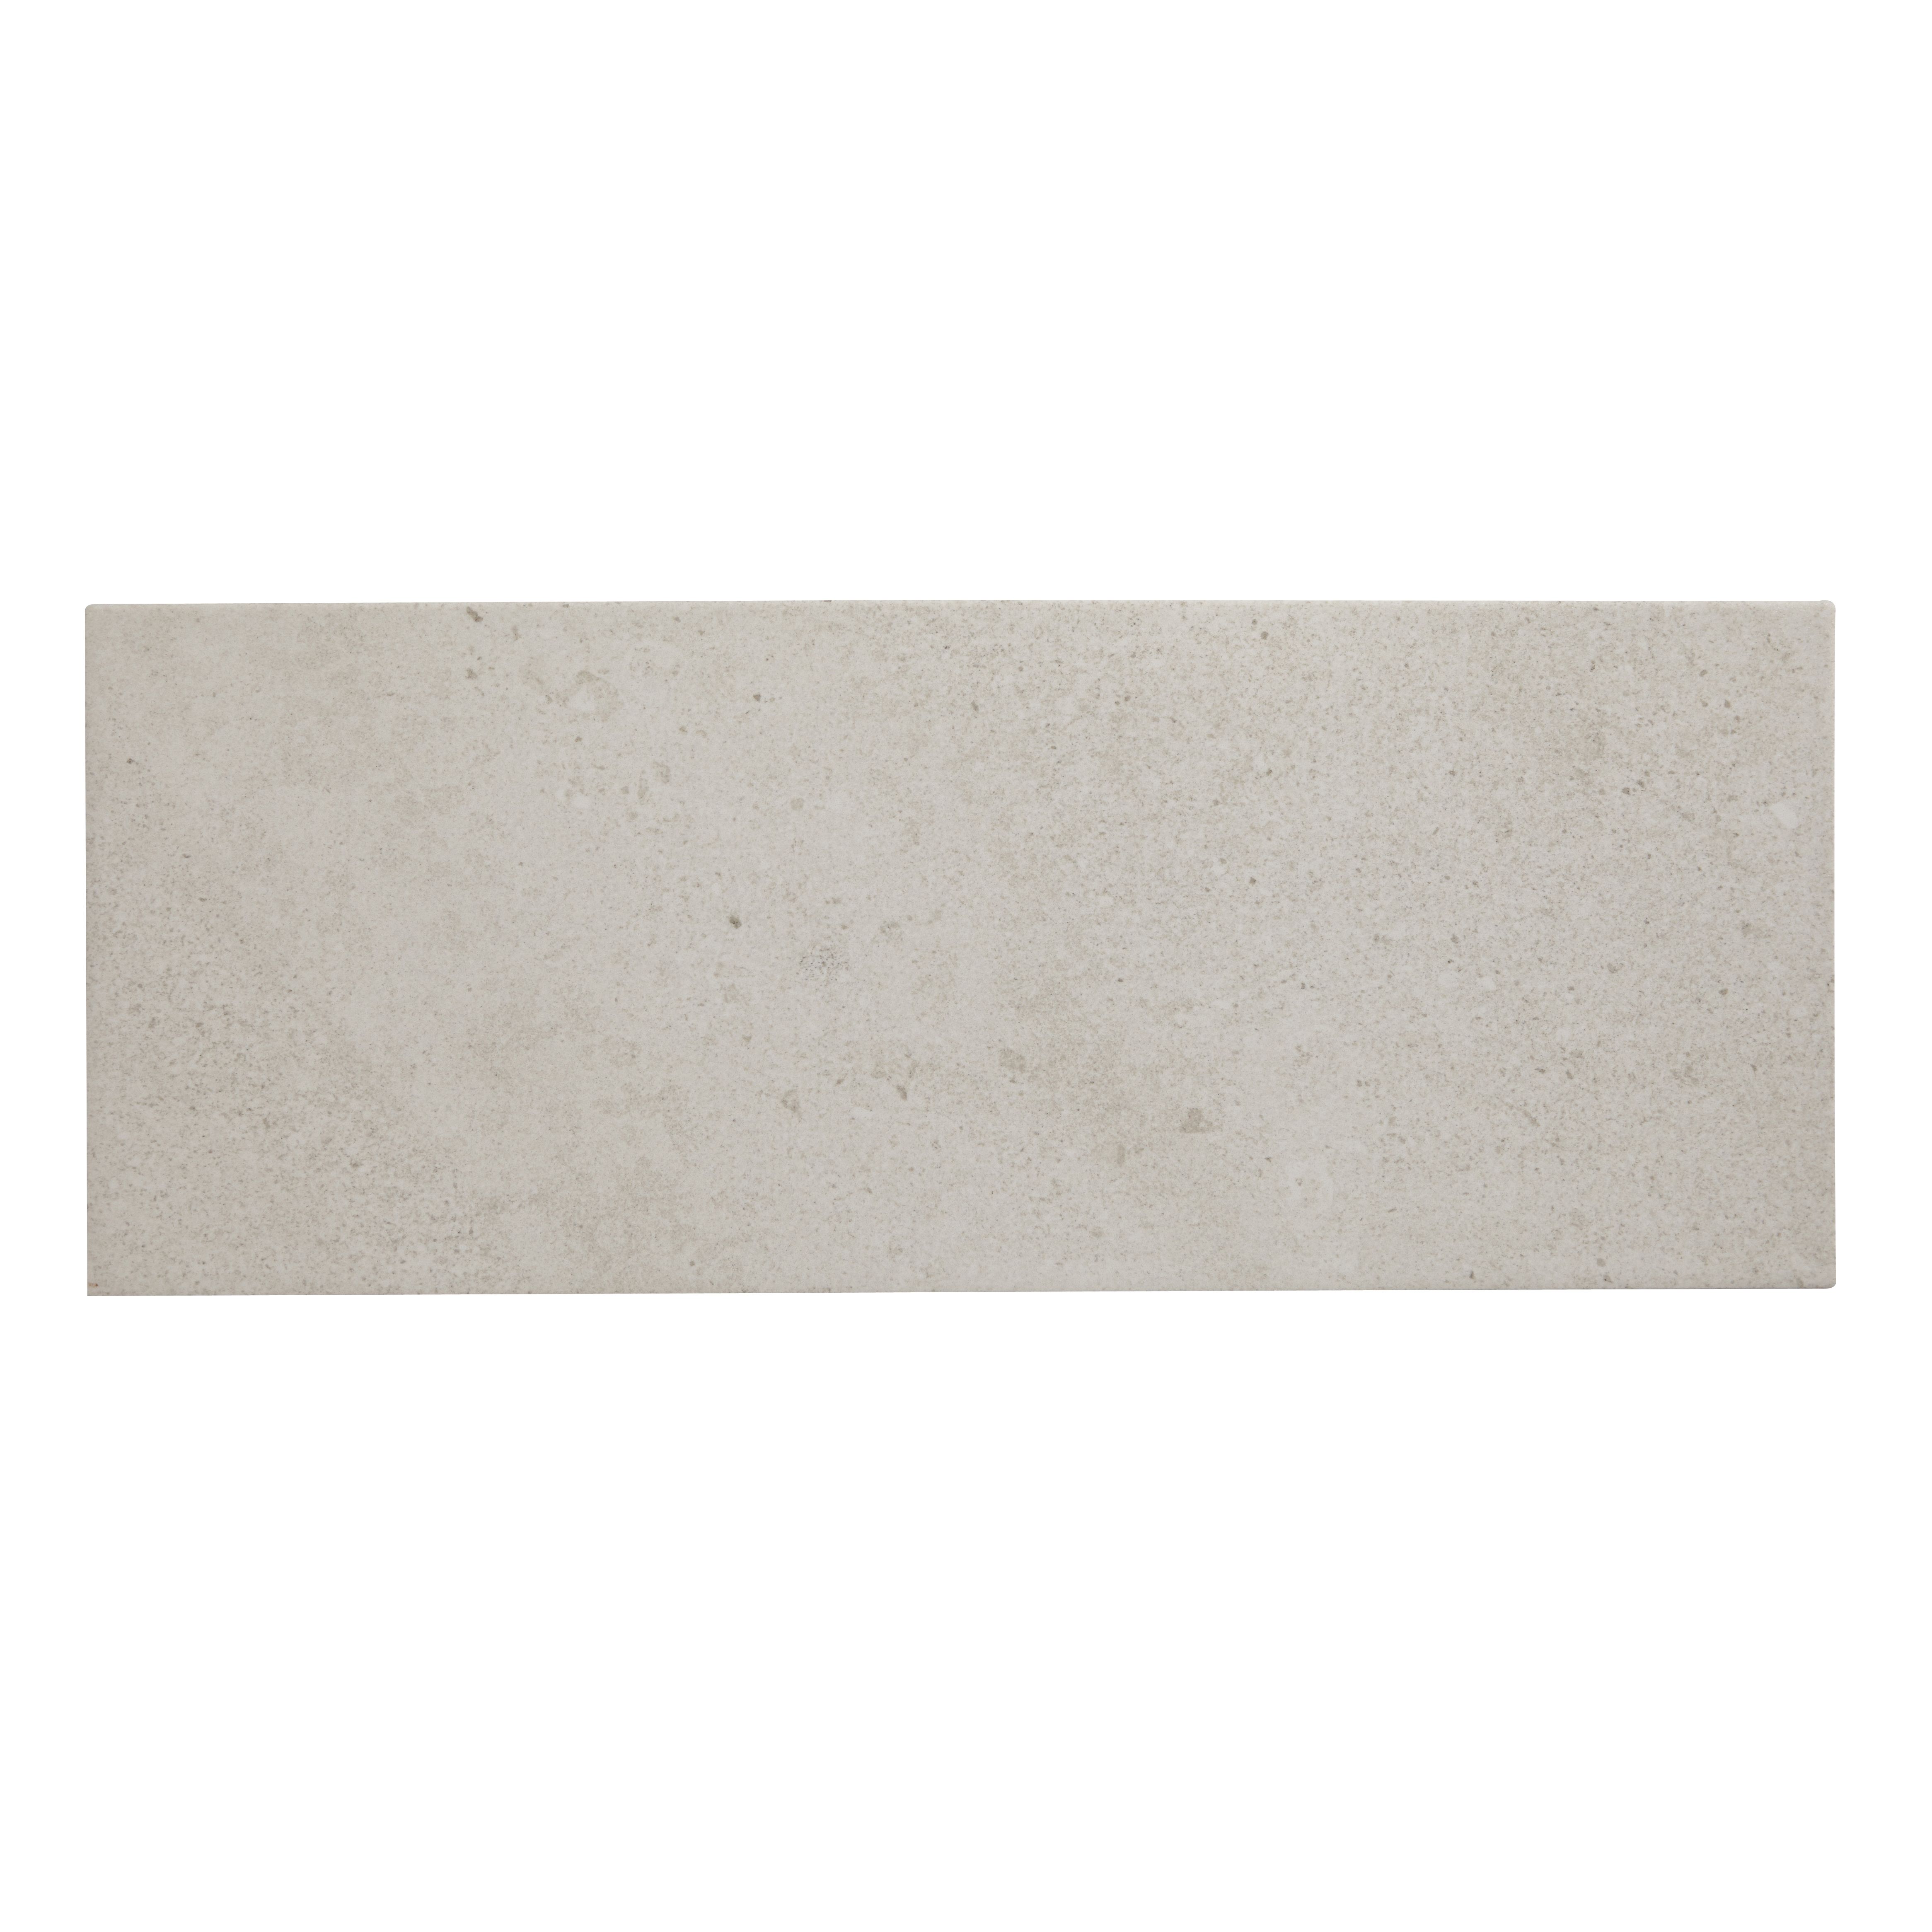 Milestone Ivory Plain Ceramic Wall tile, 1, Sample